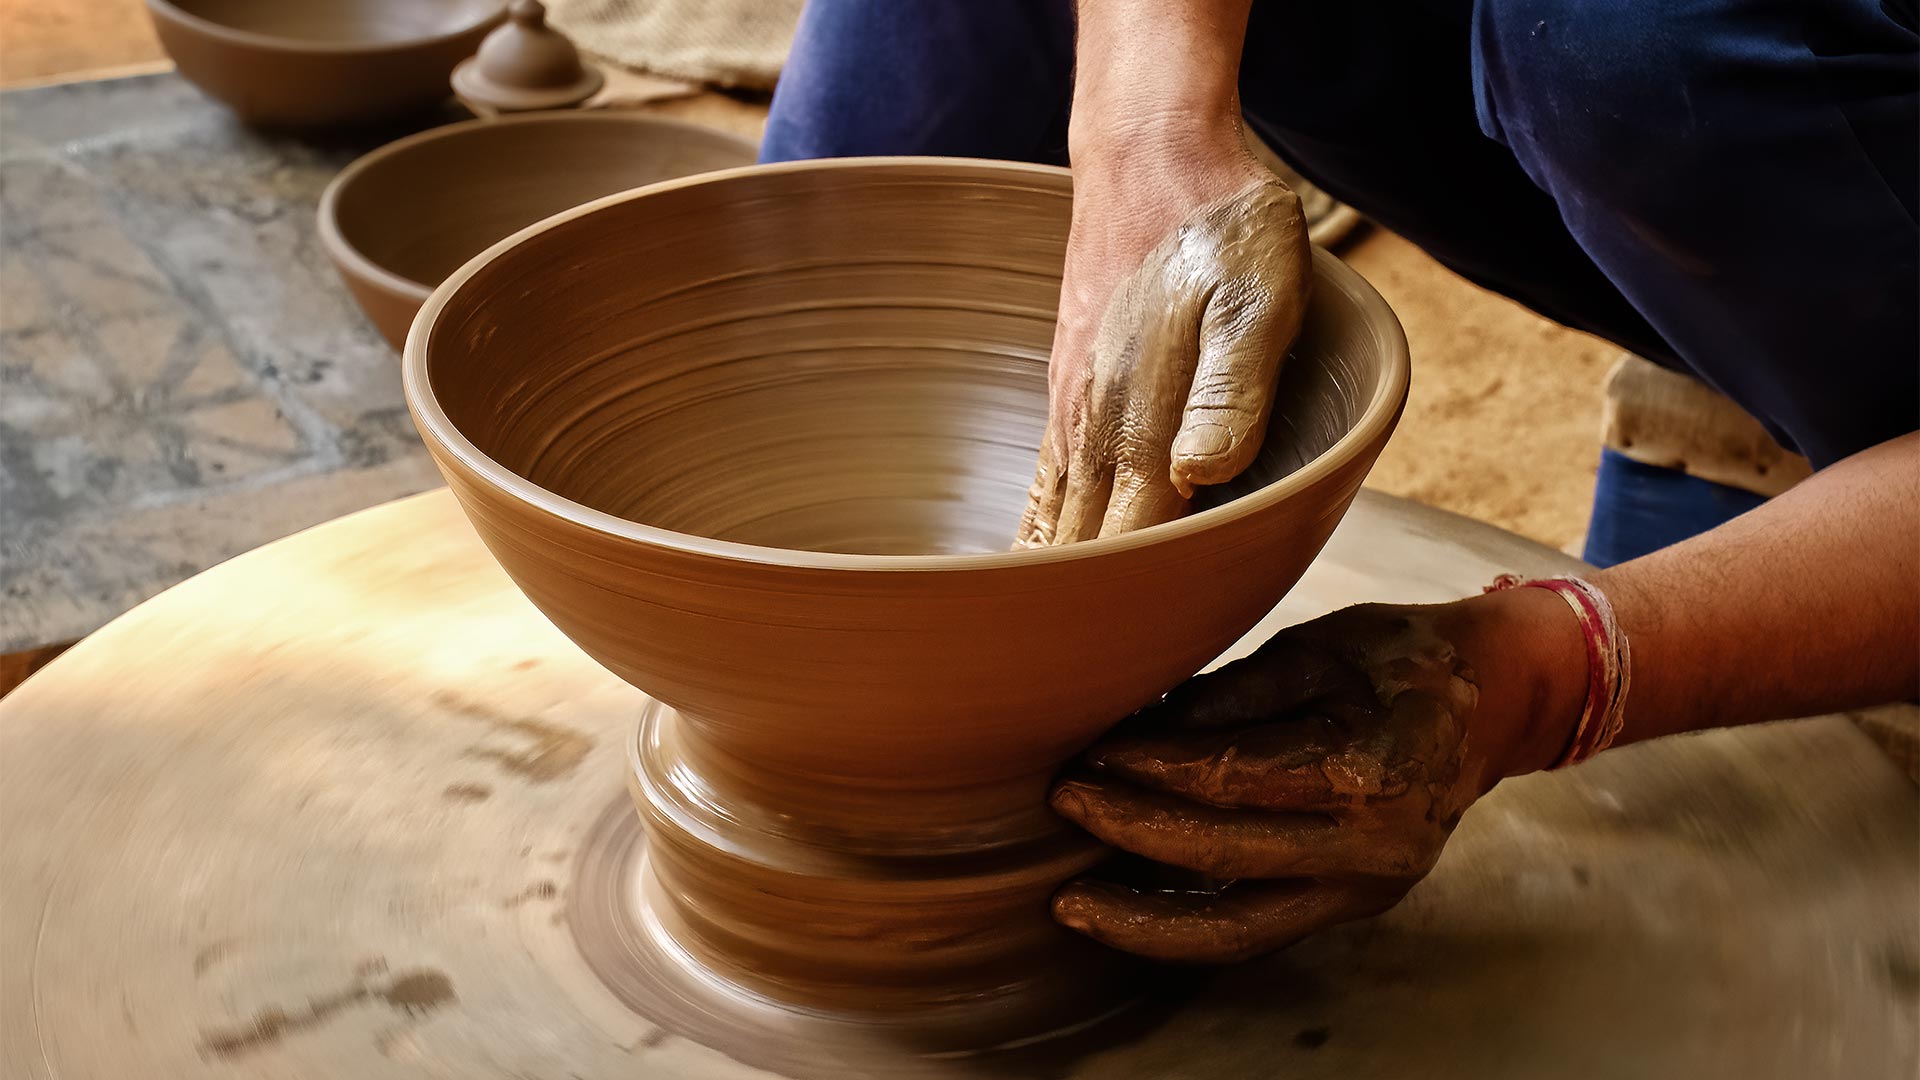 A potter transforming a lump of clay into a bowl